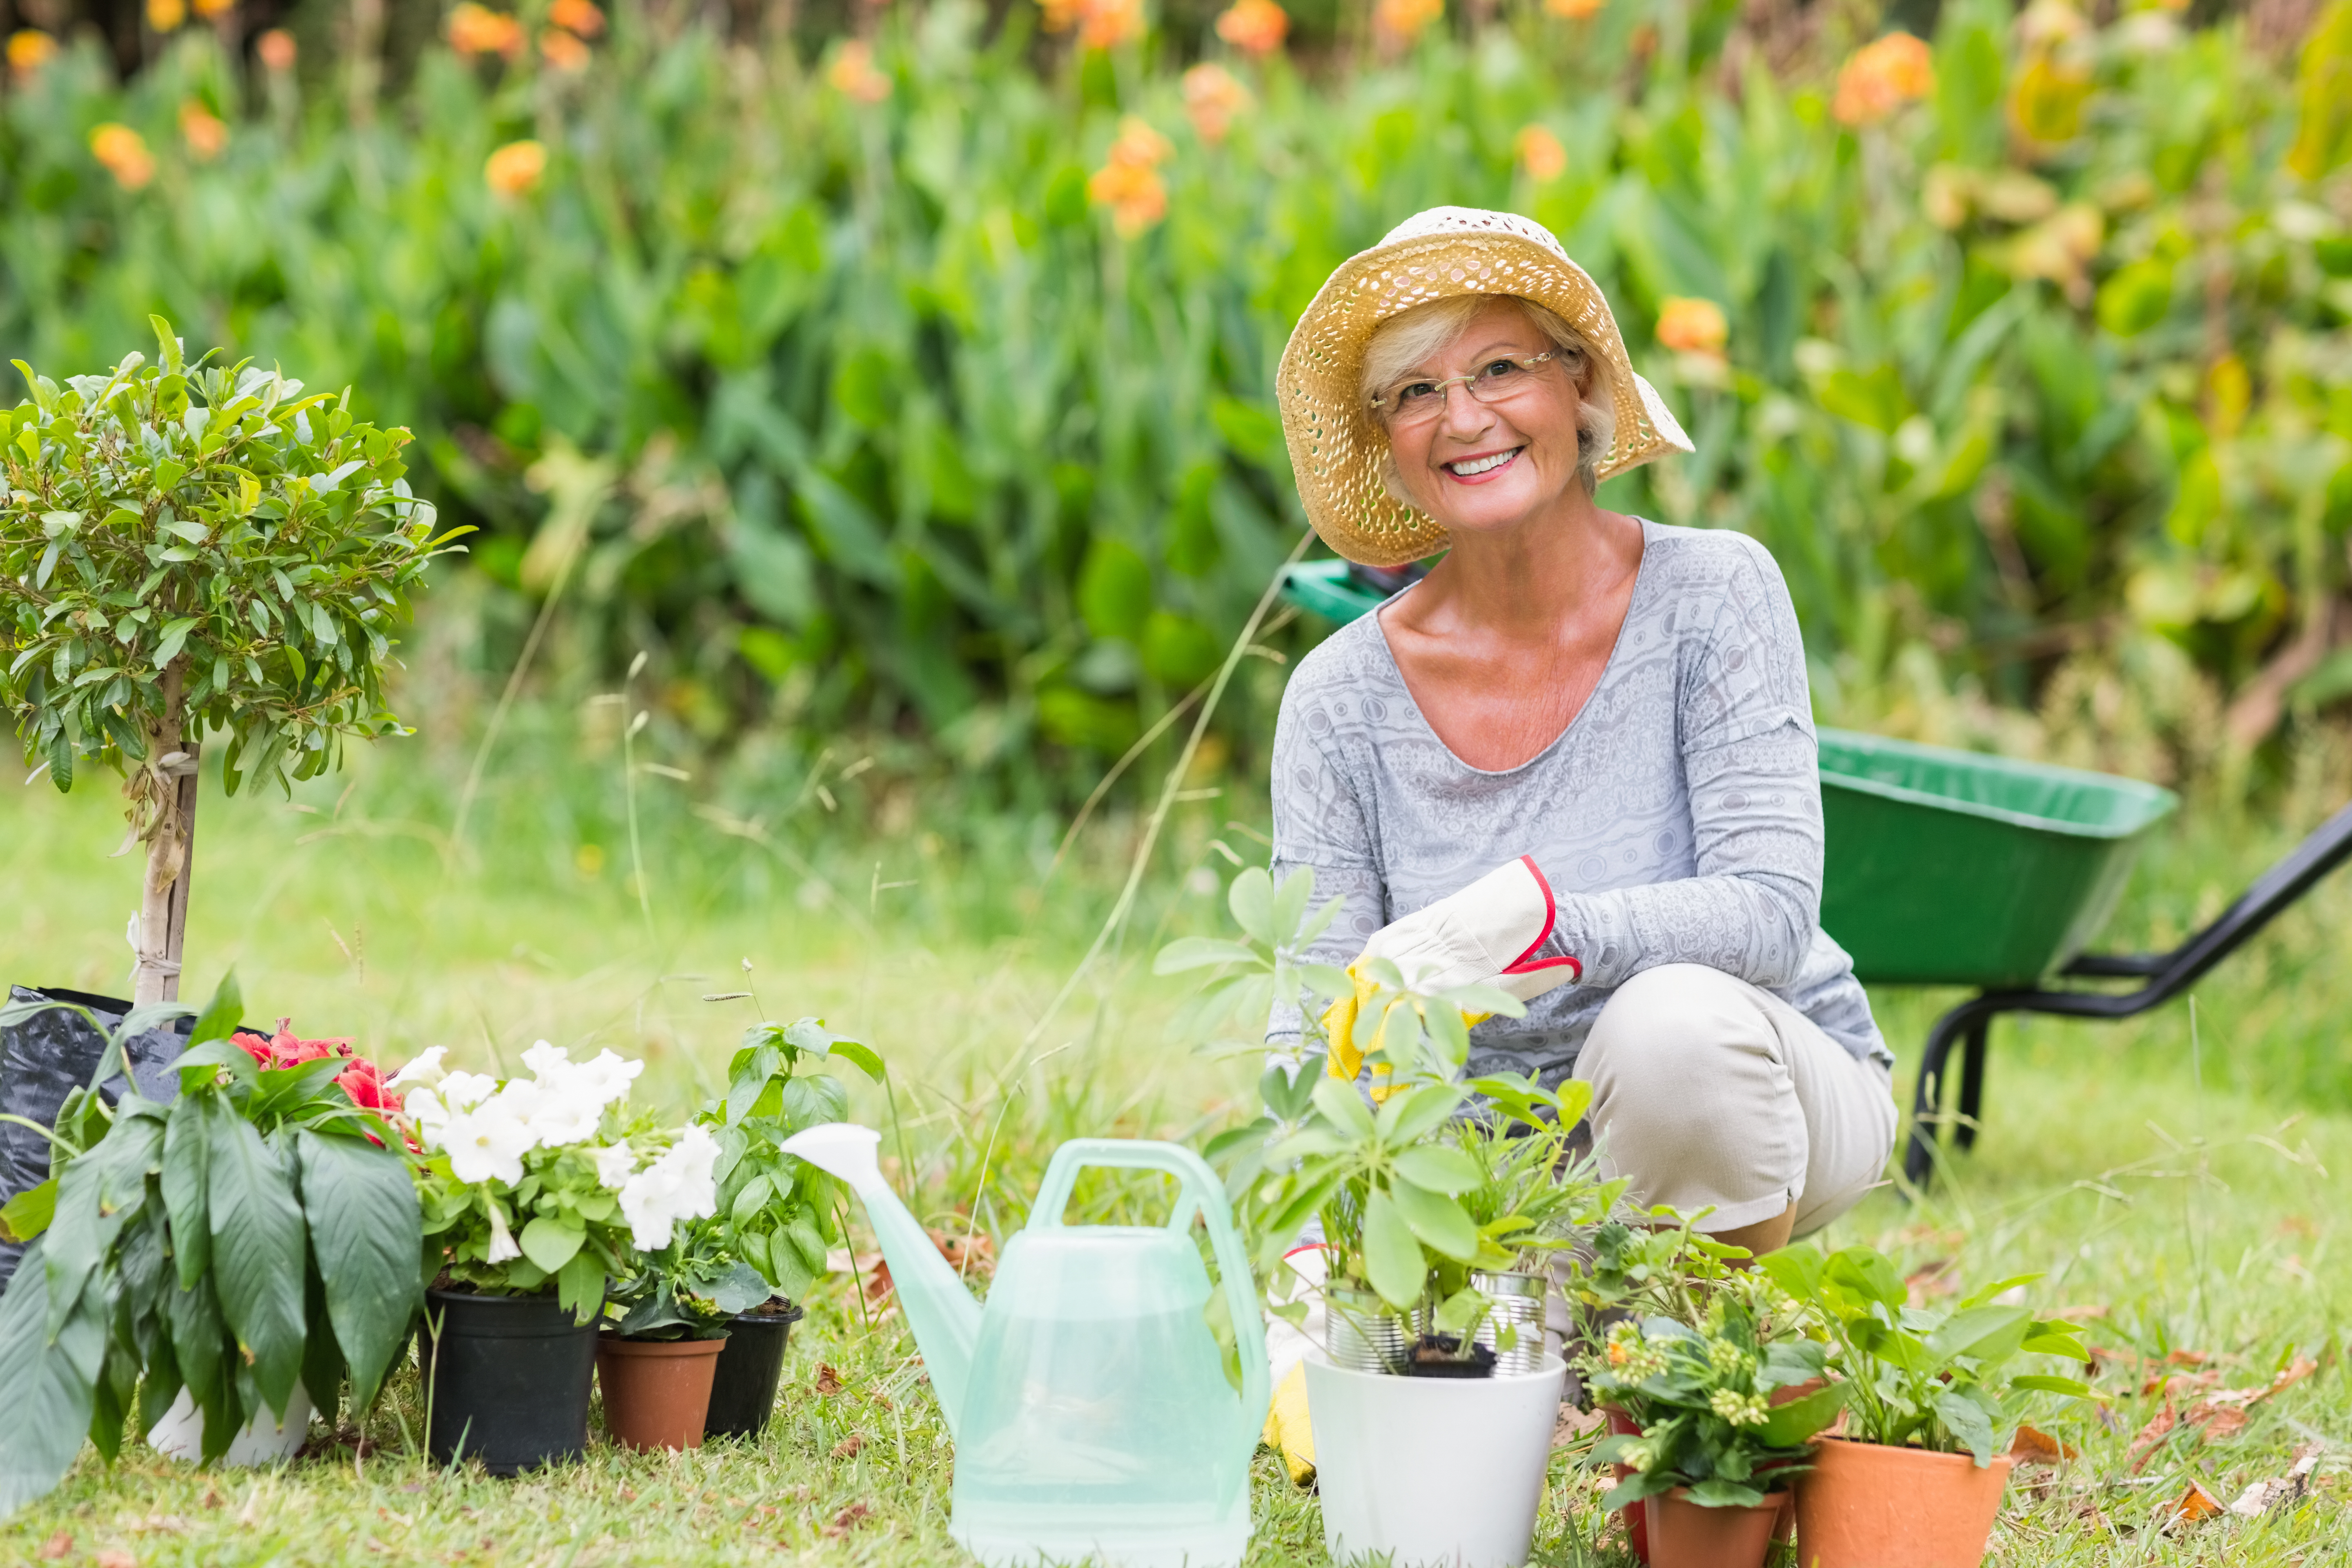 A happy senior lady working in her garden | Source: Shutterstock